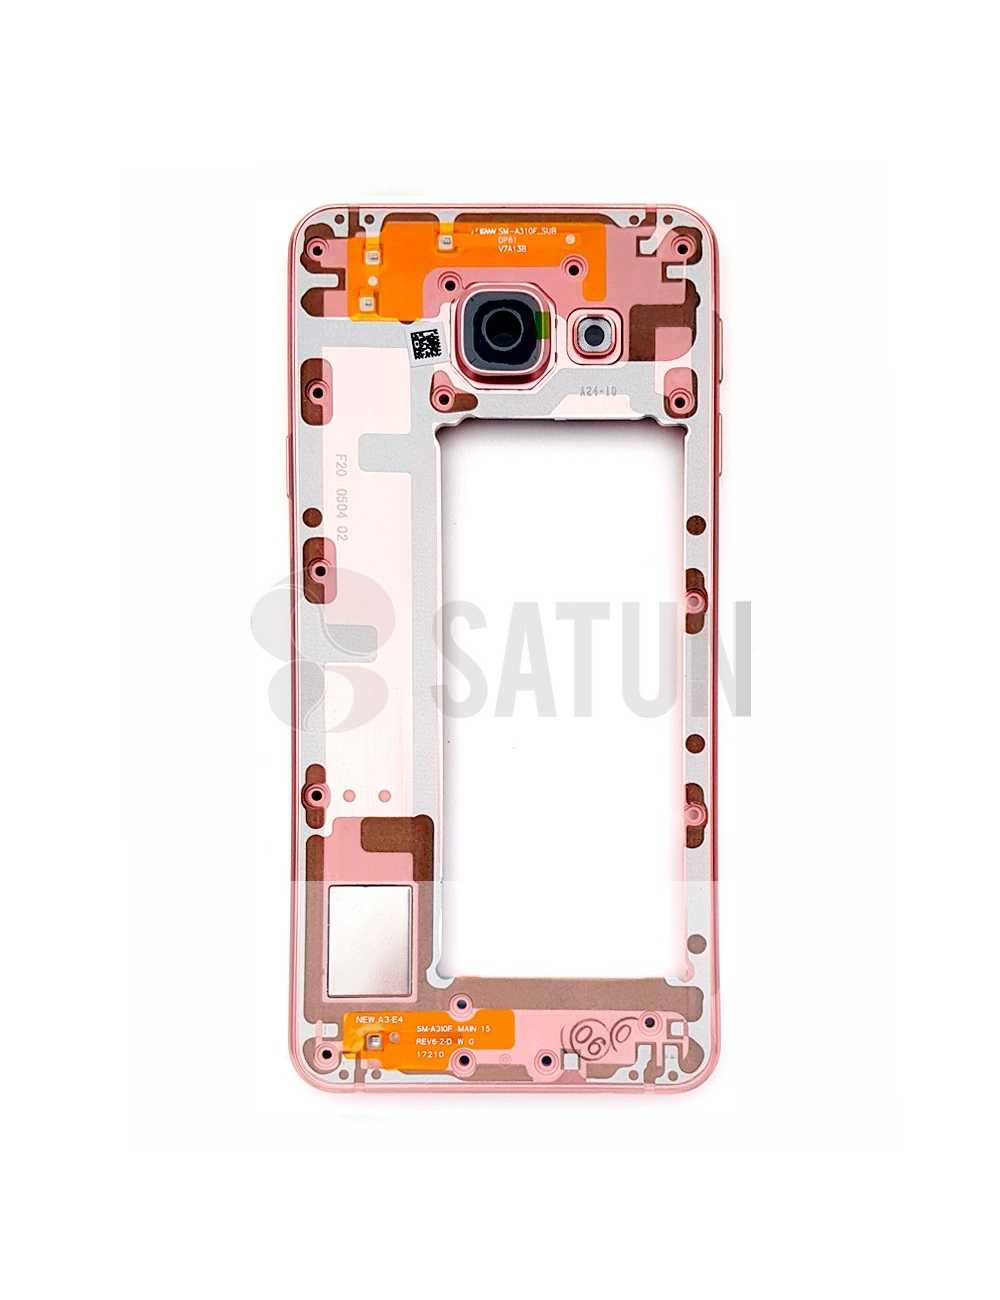 Carcasa intermedia Samsung Galaxy A3 2016 rosa (original con uso)